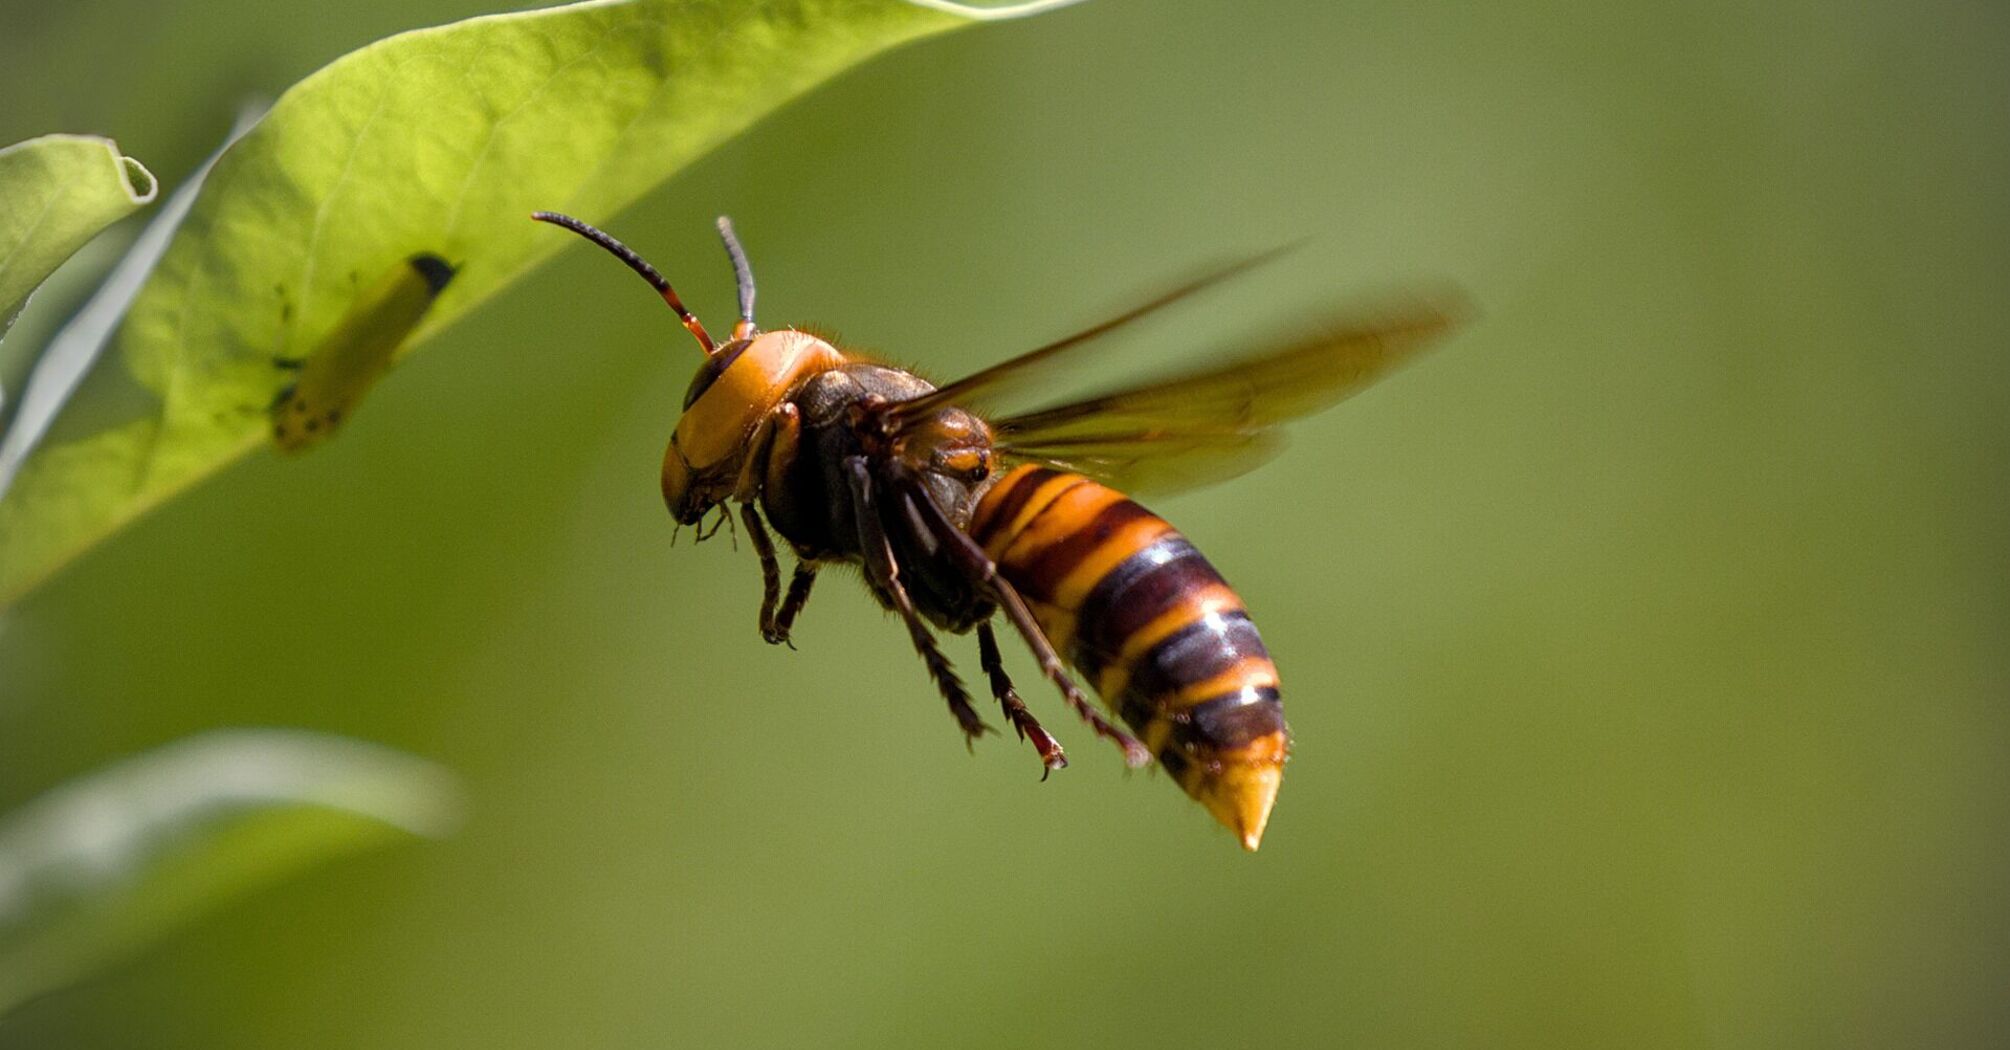 Asian hornet flying near a green leaf